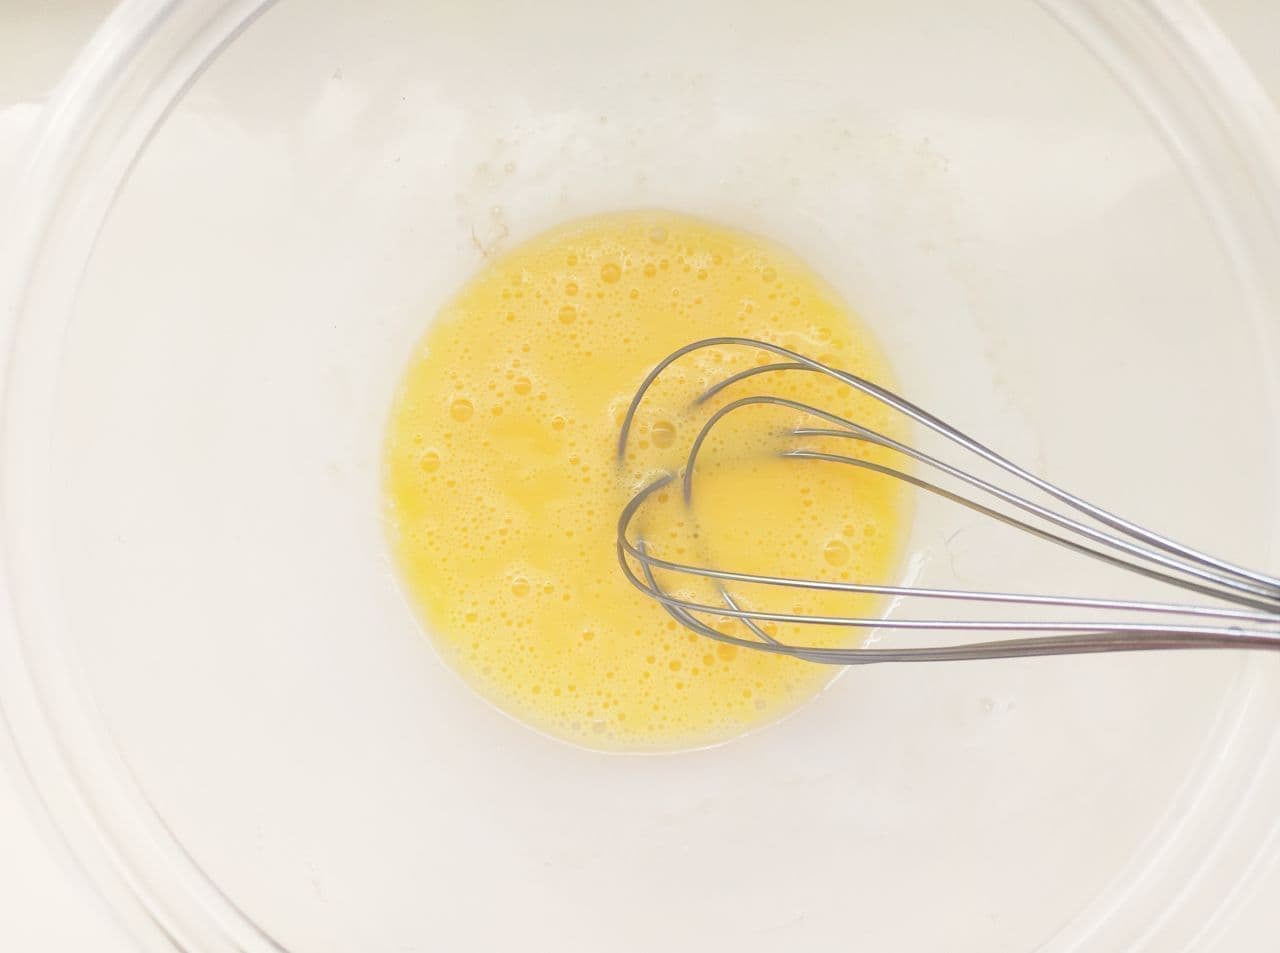 Easy "custard cream" recipe in the microwave